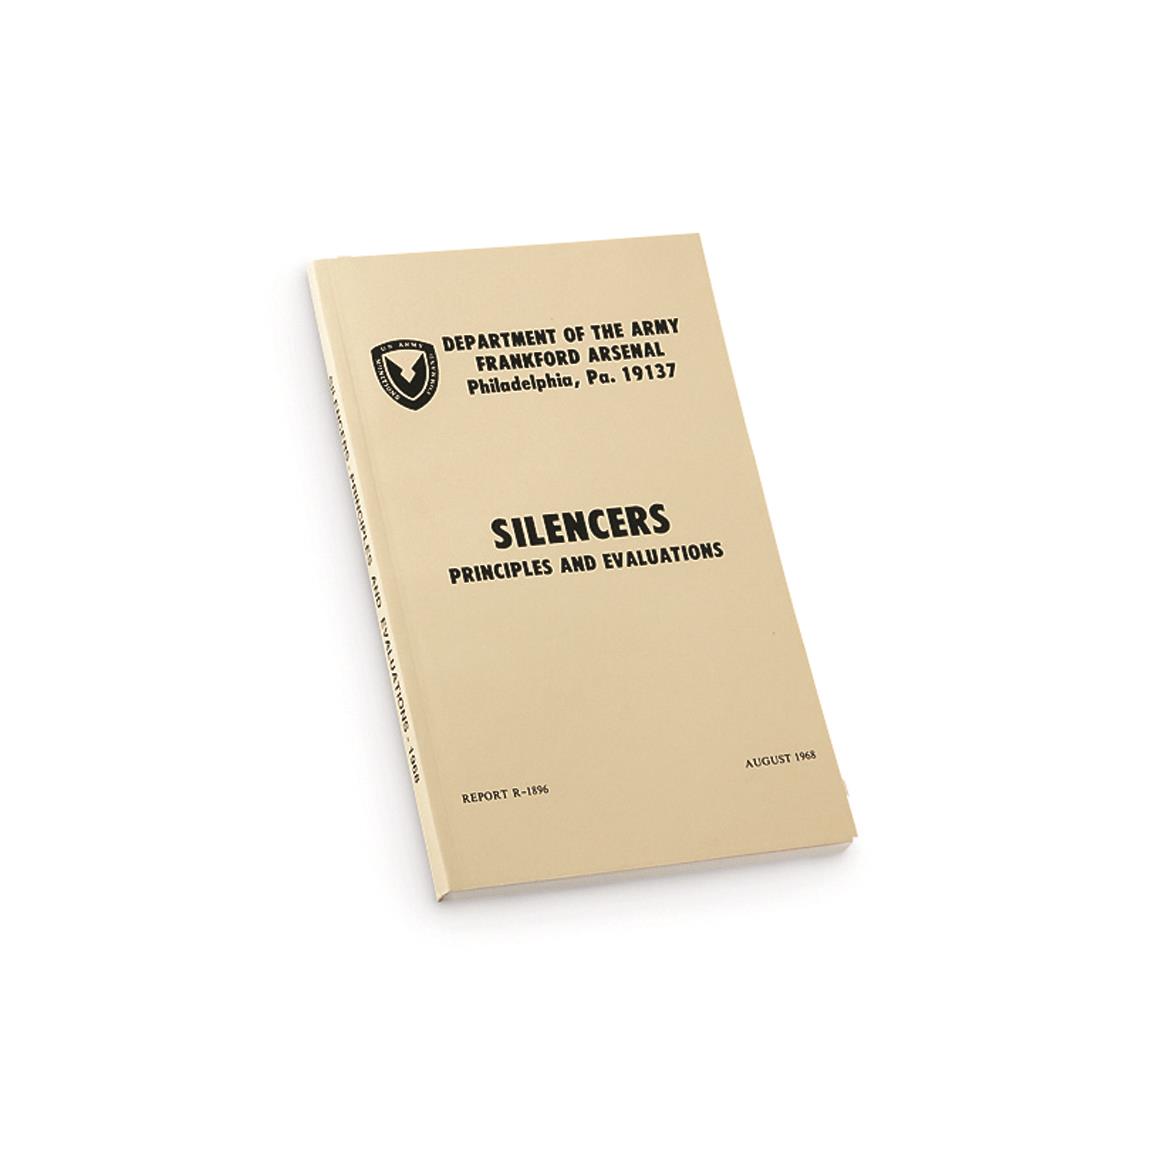 U.S. Military Surplus Technical Manual on Silencers, New